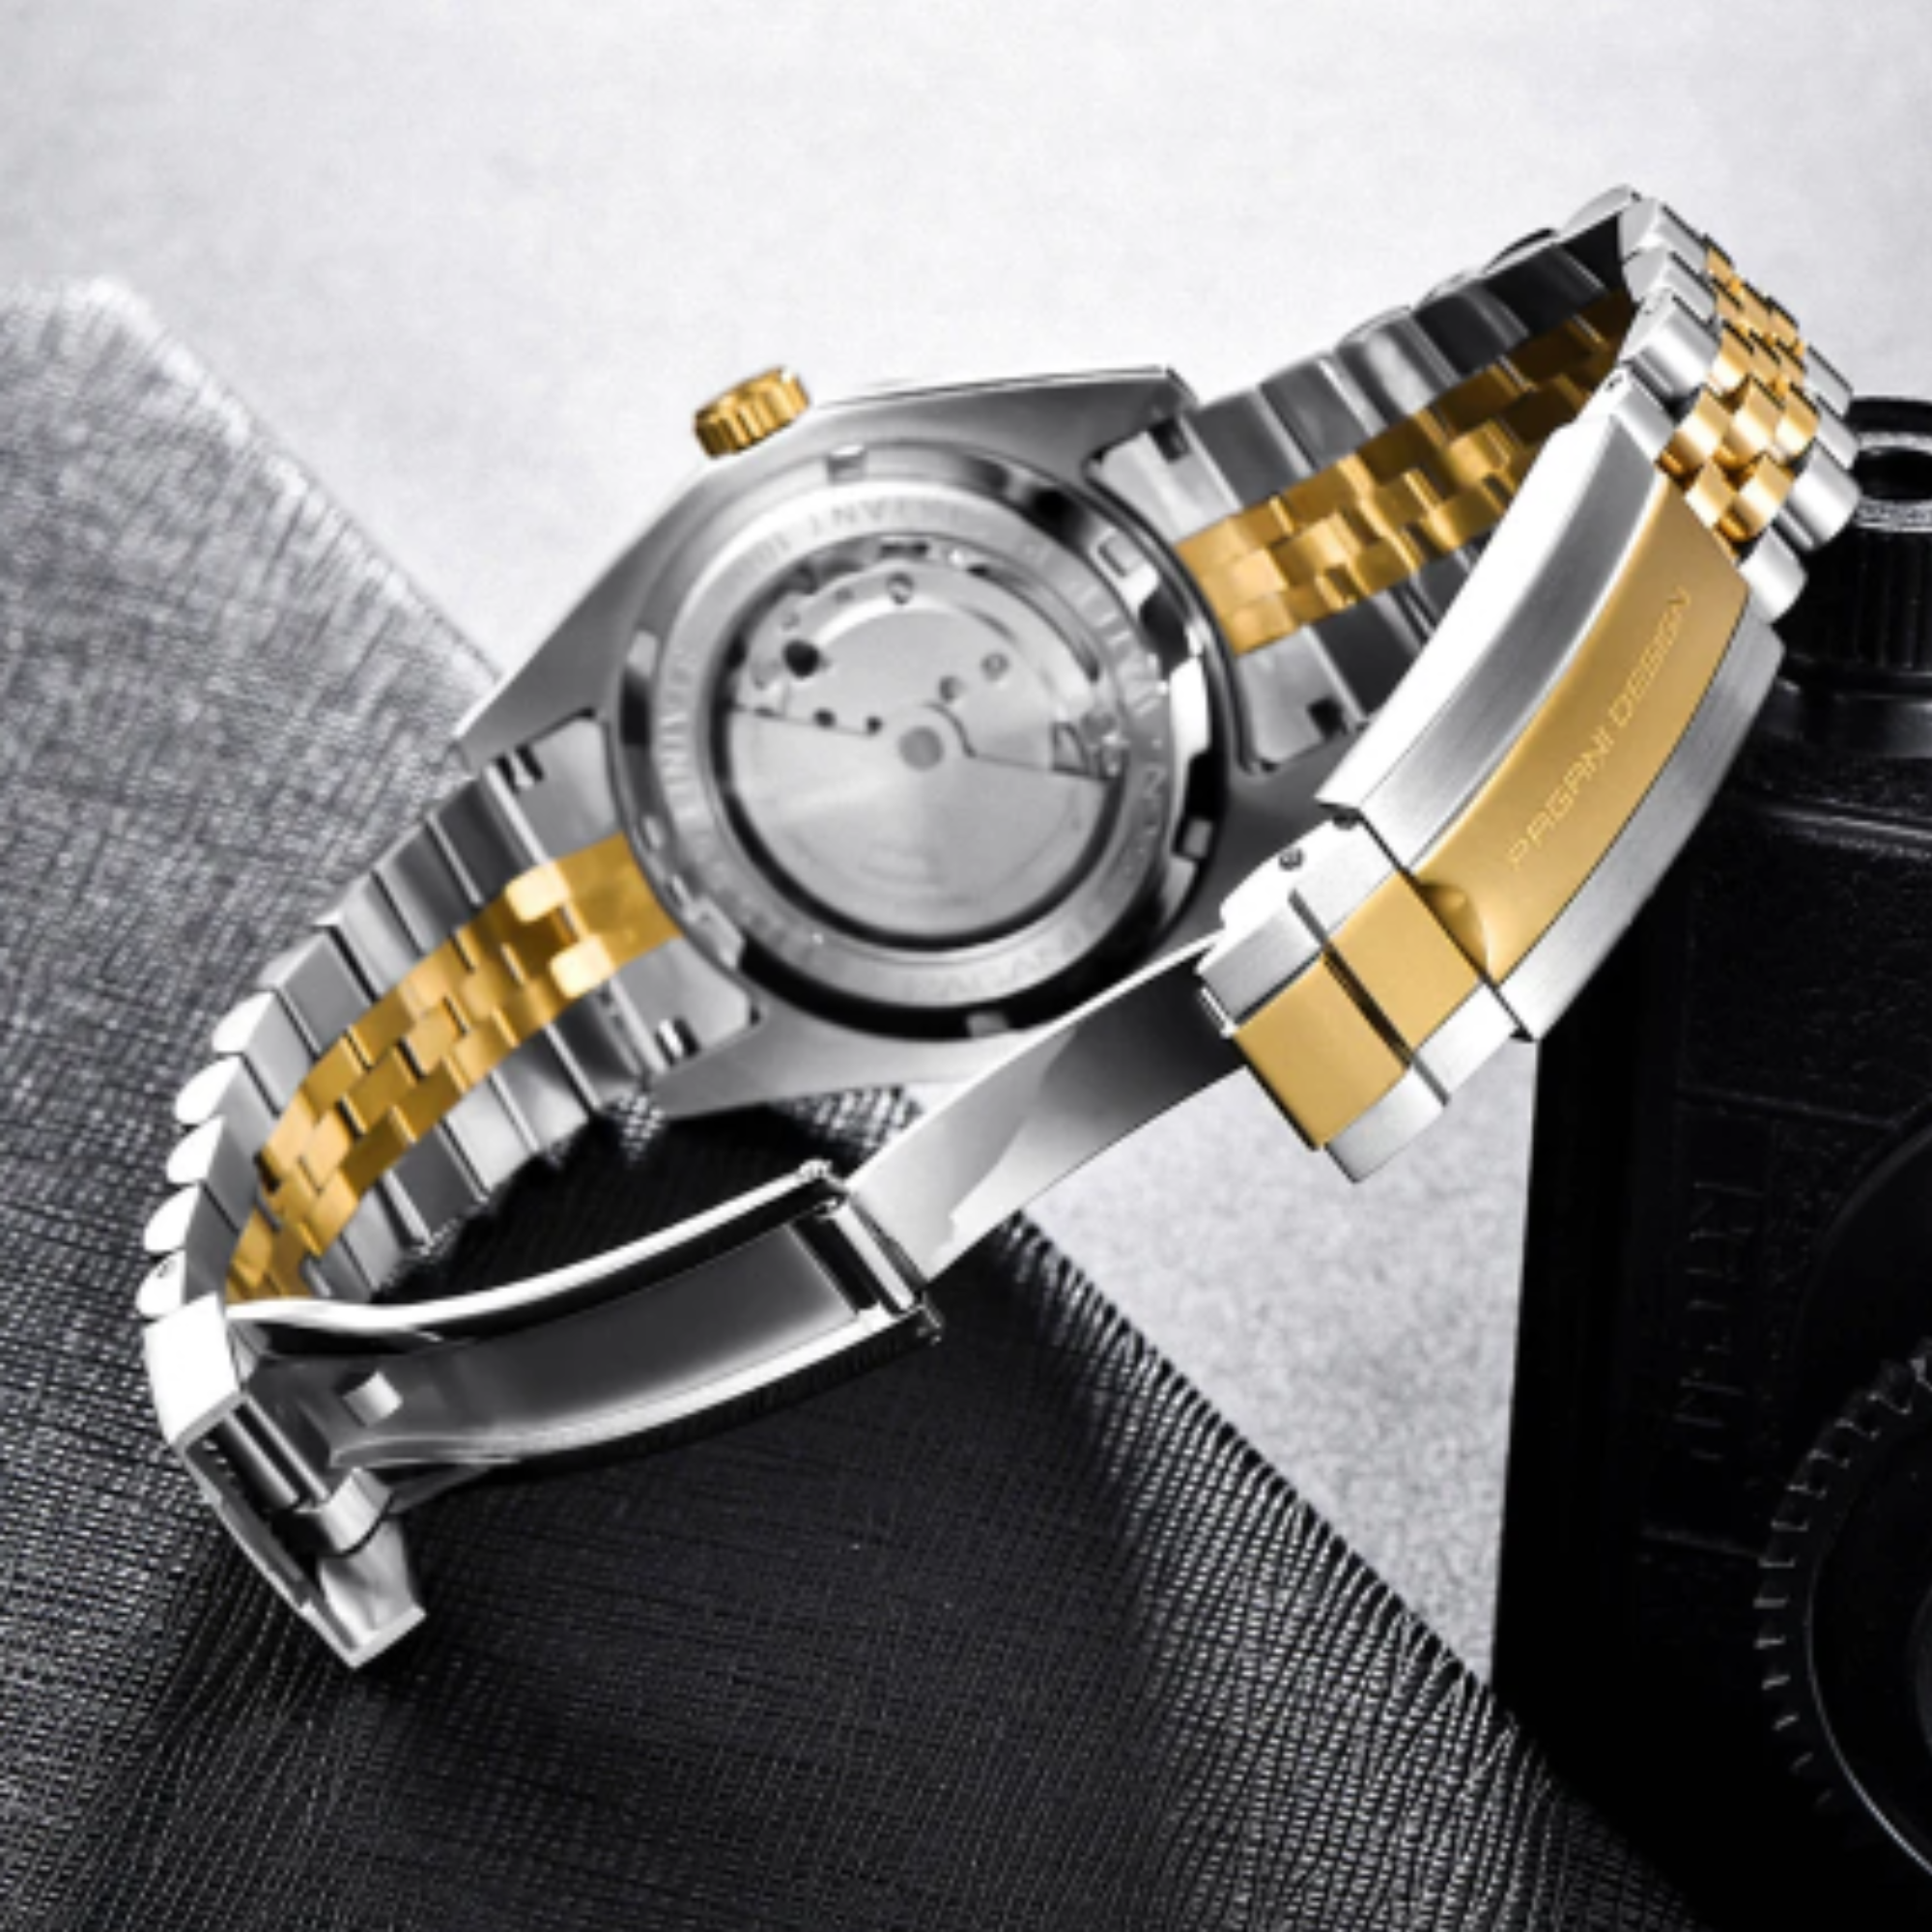 Pagani Design PD-1645 DateJust (Seiko NH-35A Automatic Movement) Mechanical Watch 200M Waterproof Watch Stainless Steel Watch Fluted Bezel (Golden Dial - Jubilee Bracelet)